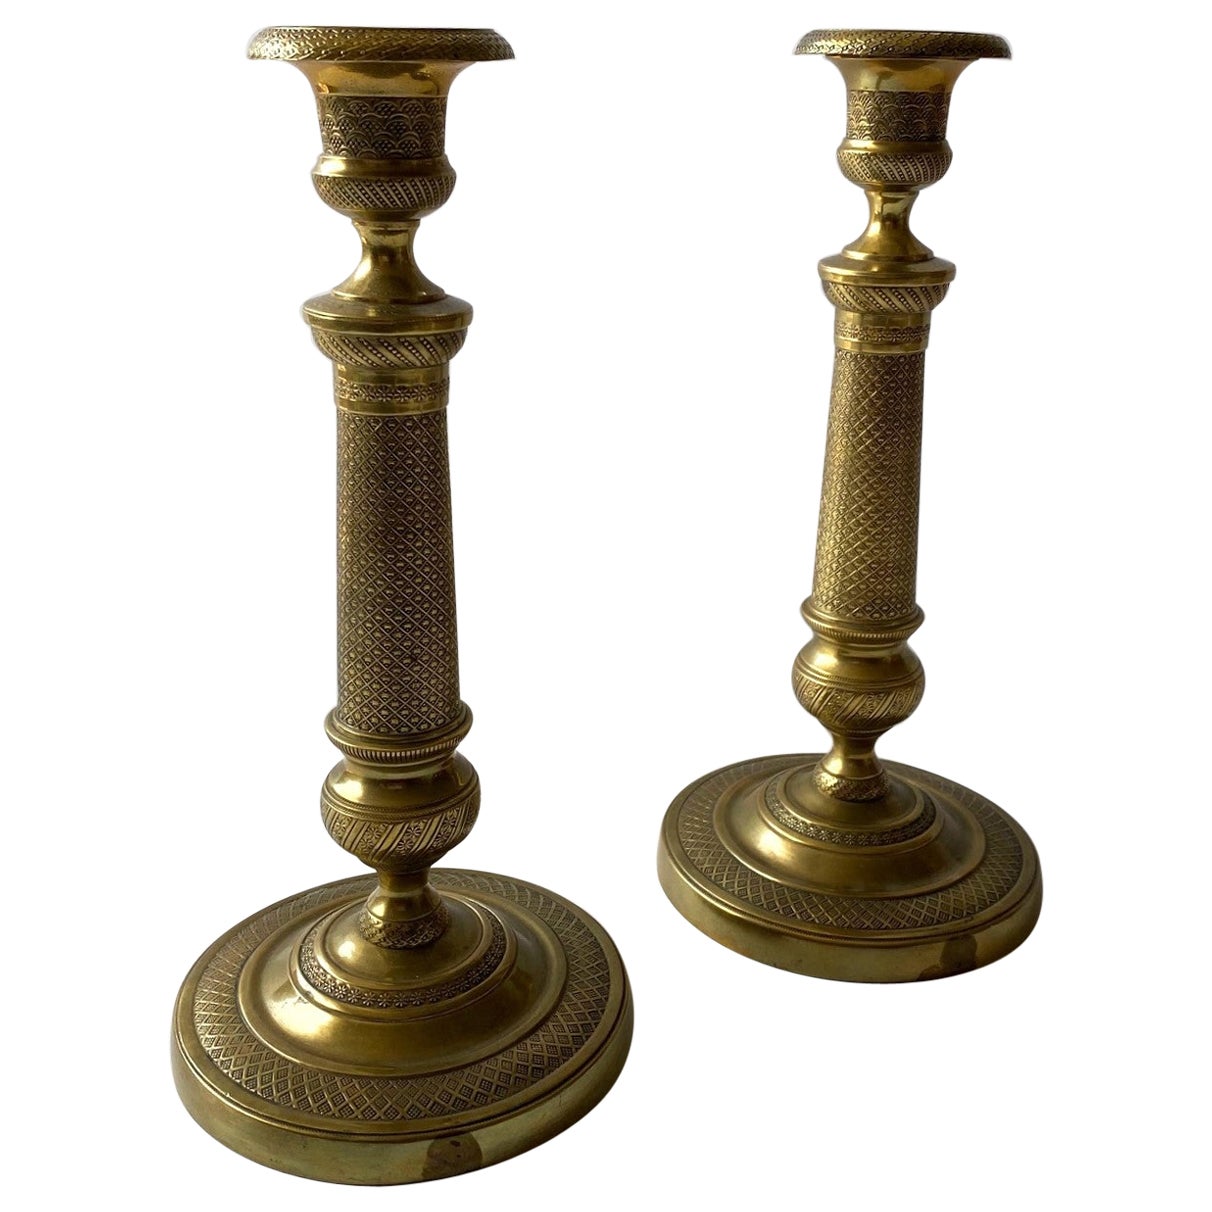 Heavily Engraved Brass English Candlesticks Set of 2